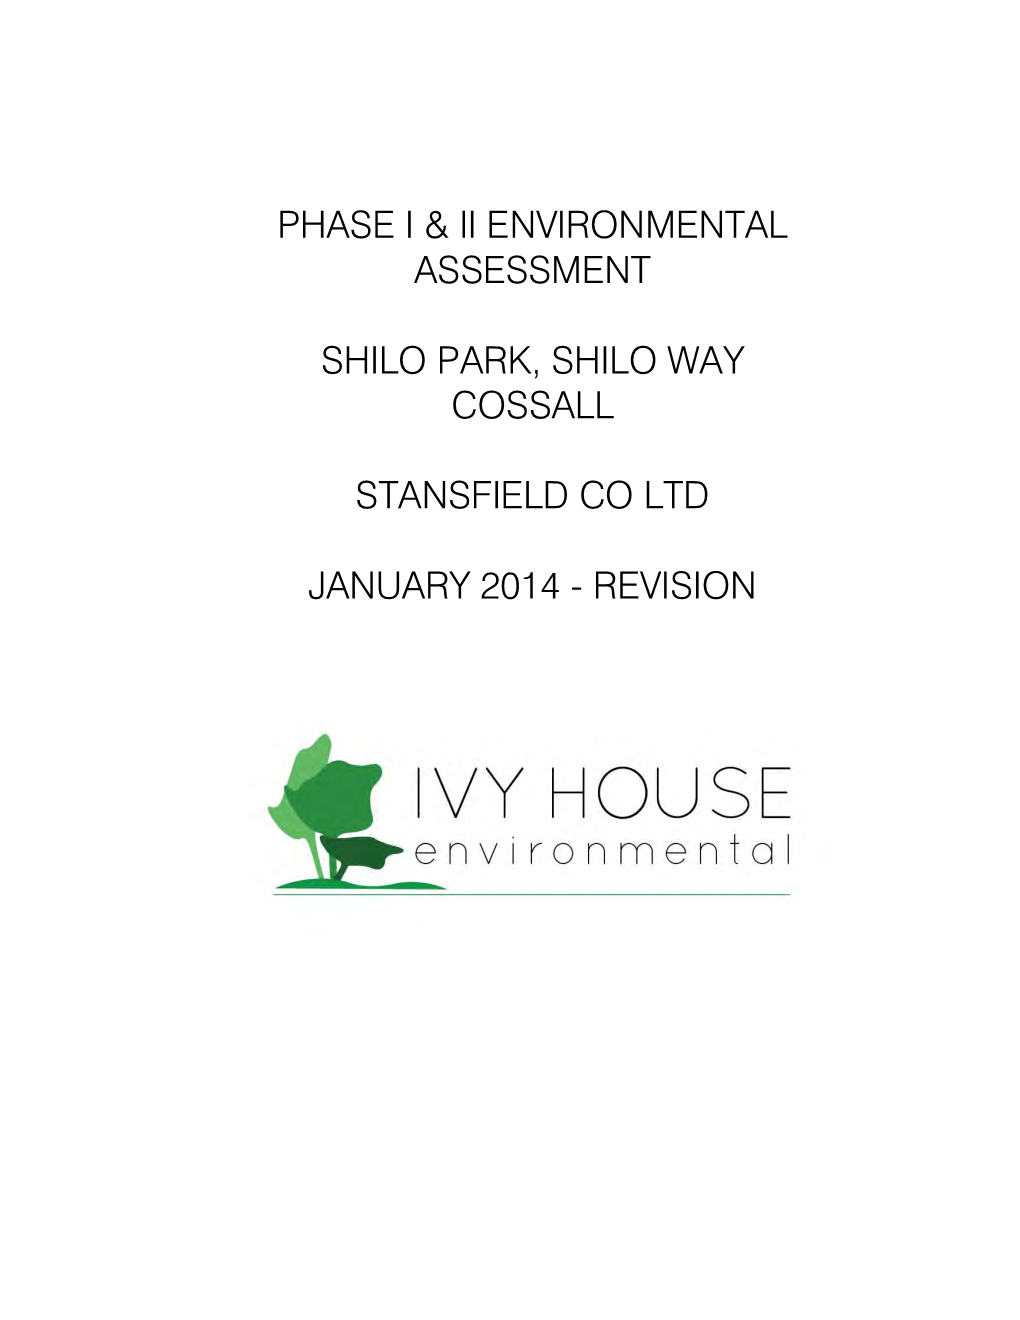 Phase I & Ii Environmental Assessment Shilo Park, Shilo Way Cossall